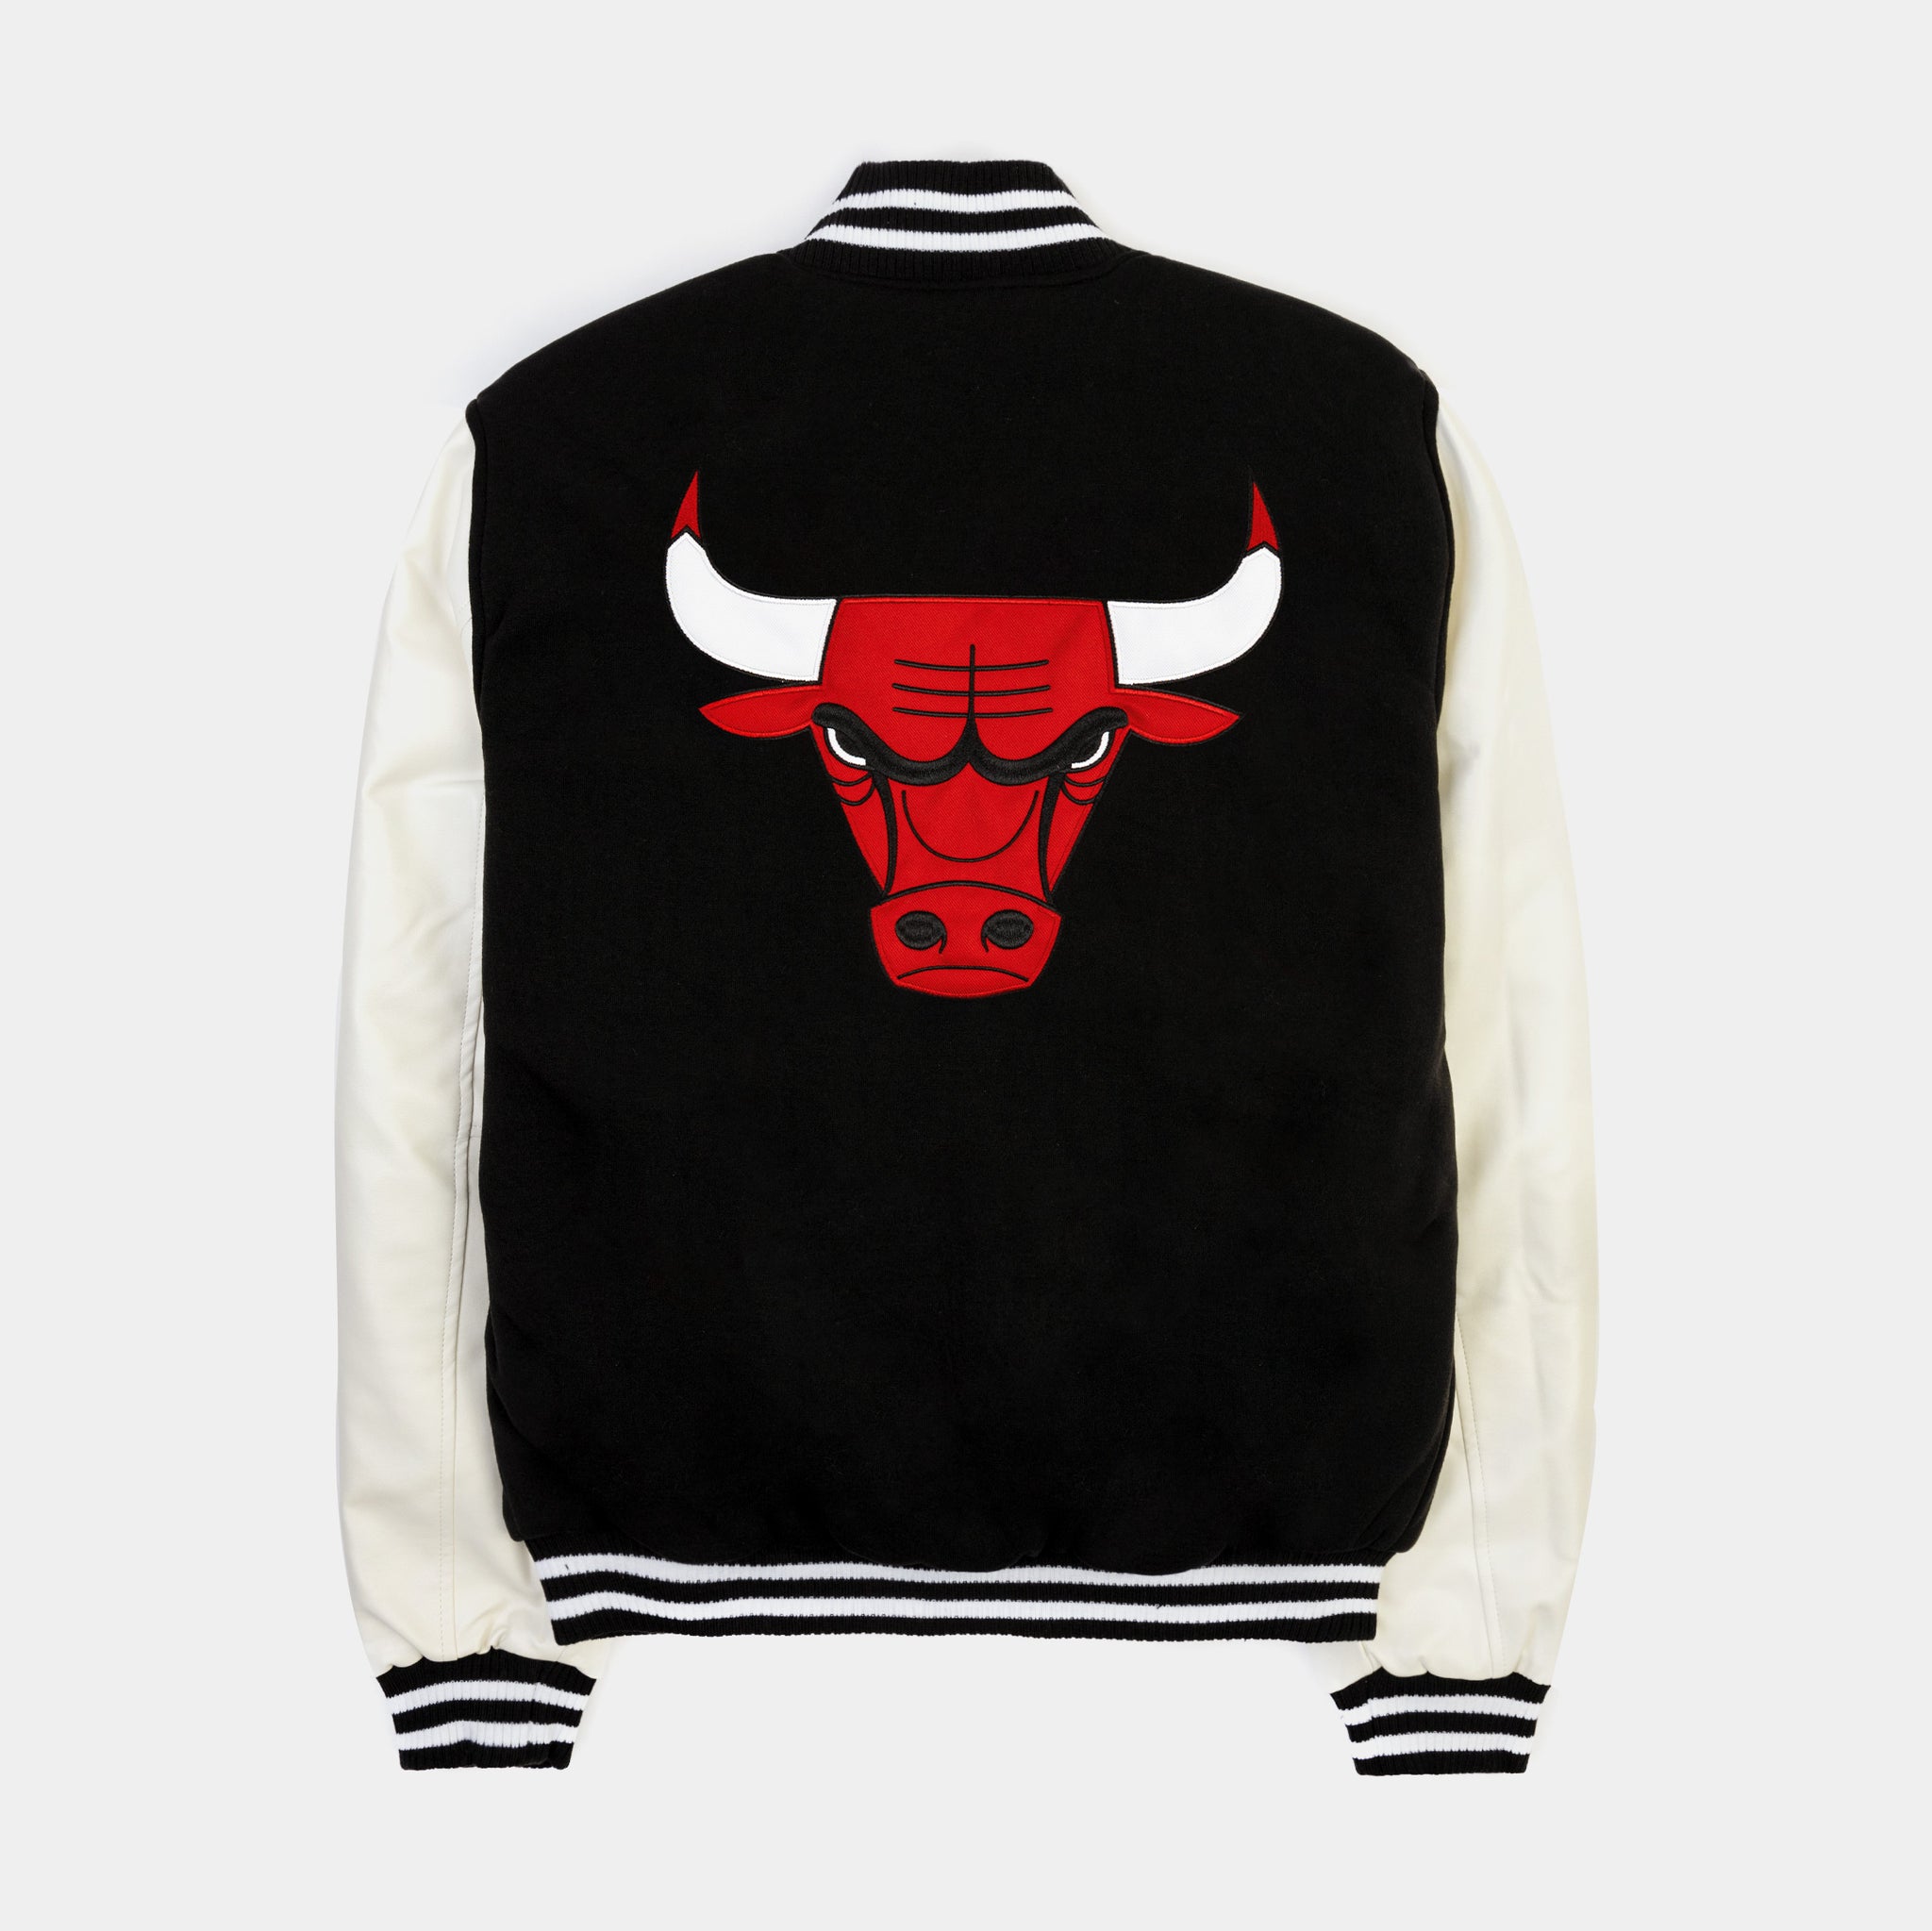 Jacket Makers Men's White Chicago Bulls Hoodie